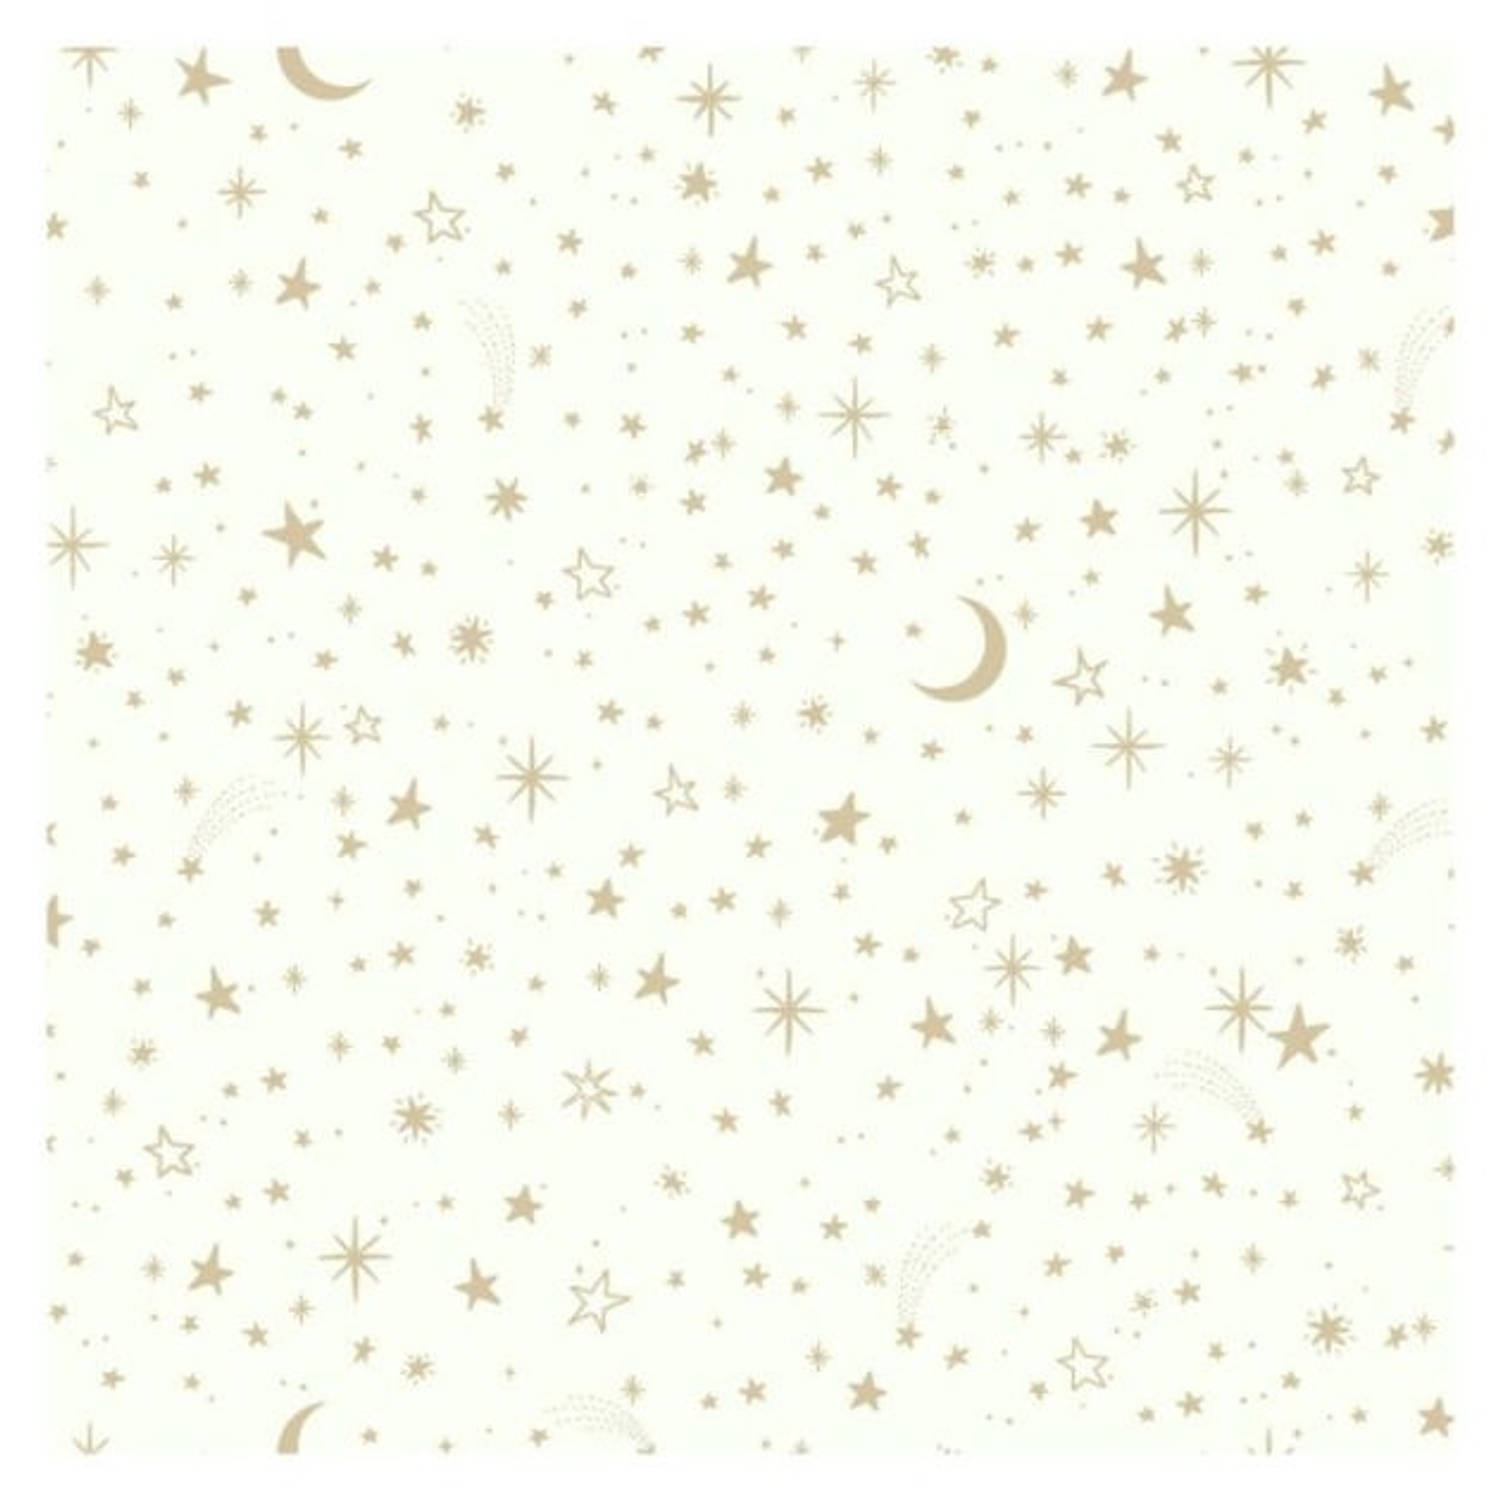 RoomMates zelfklevend behang Twinkle stars 52 x 500 cm wit-goud